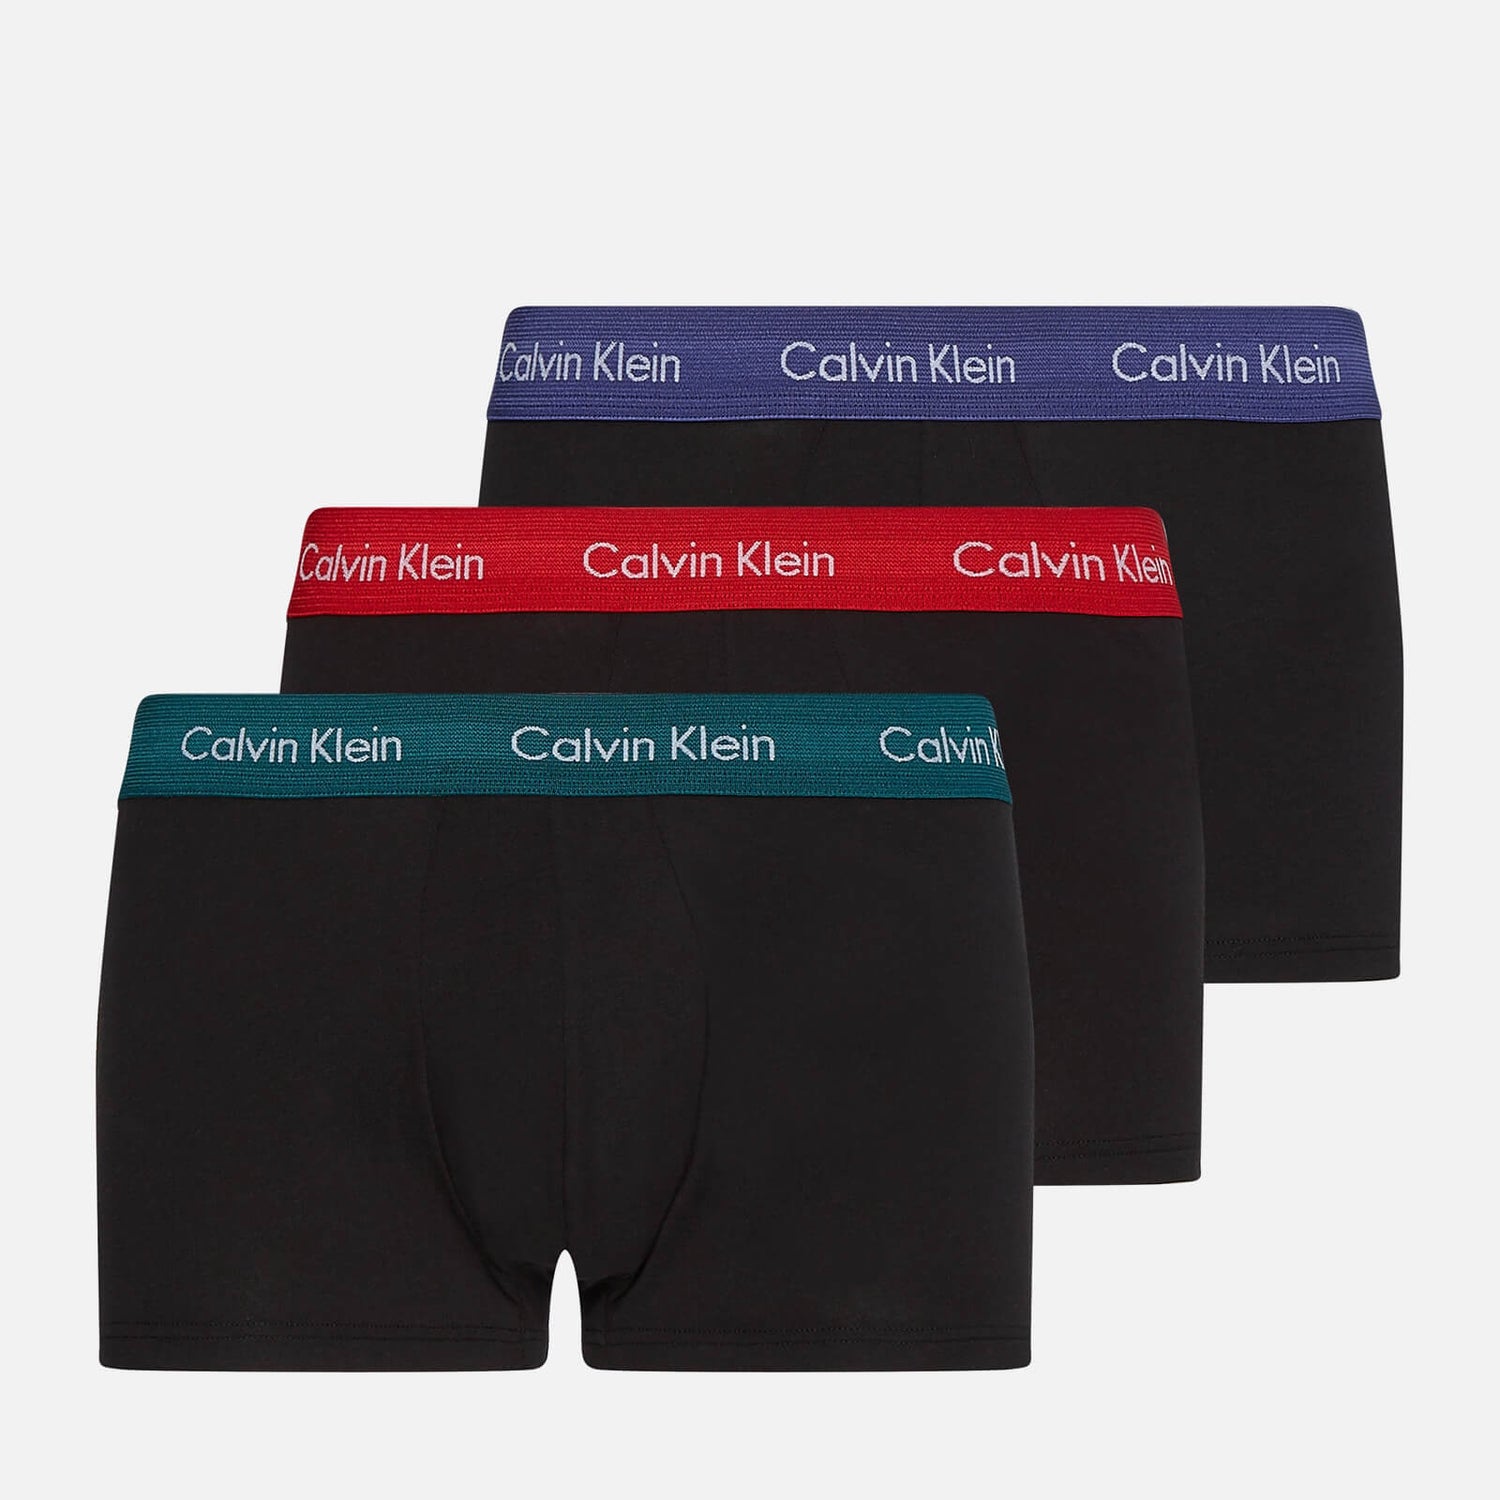 Calvin Klein Men's 3 Pack Low Rise Trunk Boxers - B-Maya Blue/Soft Grape/Rustic Red